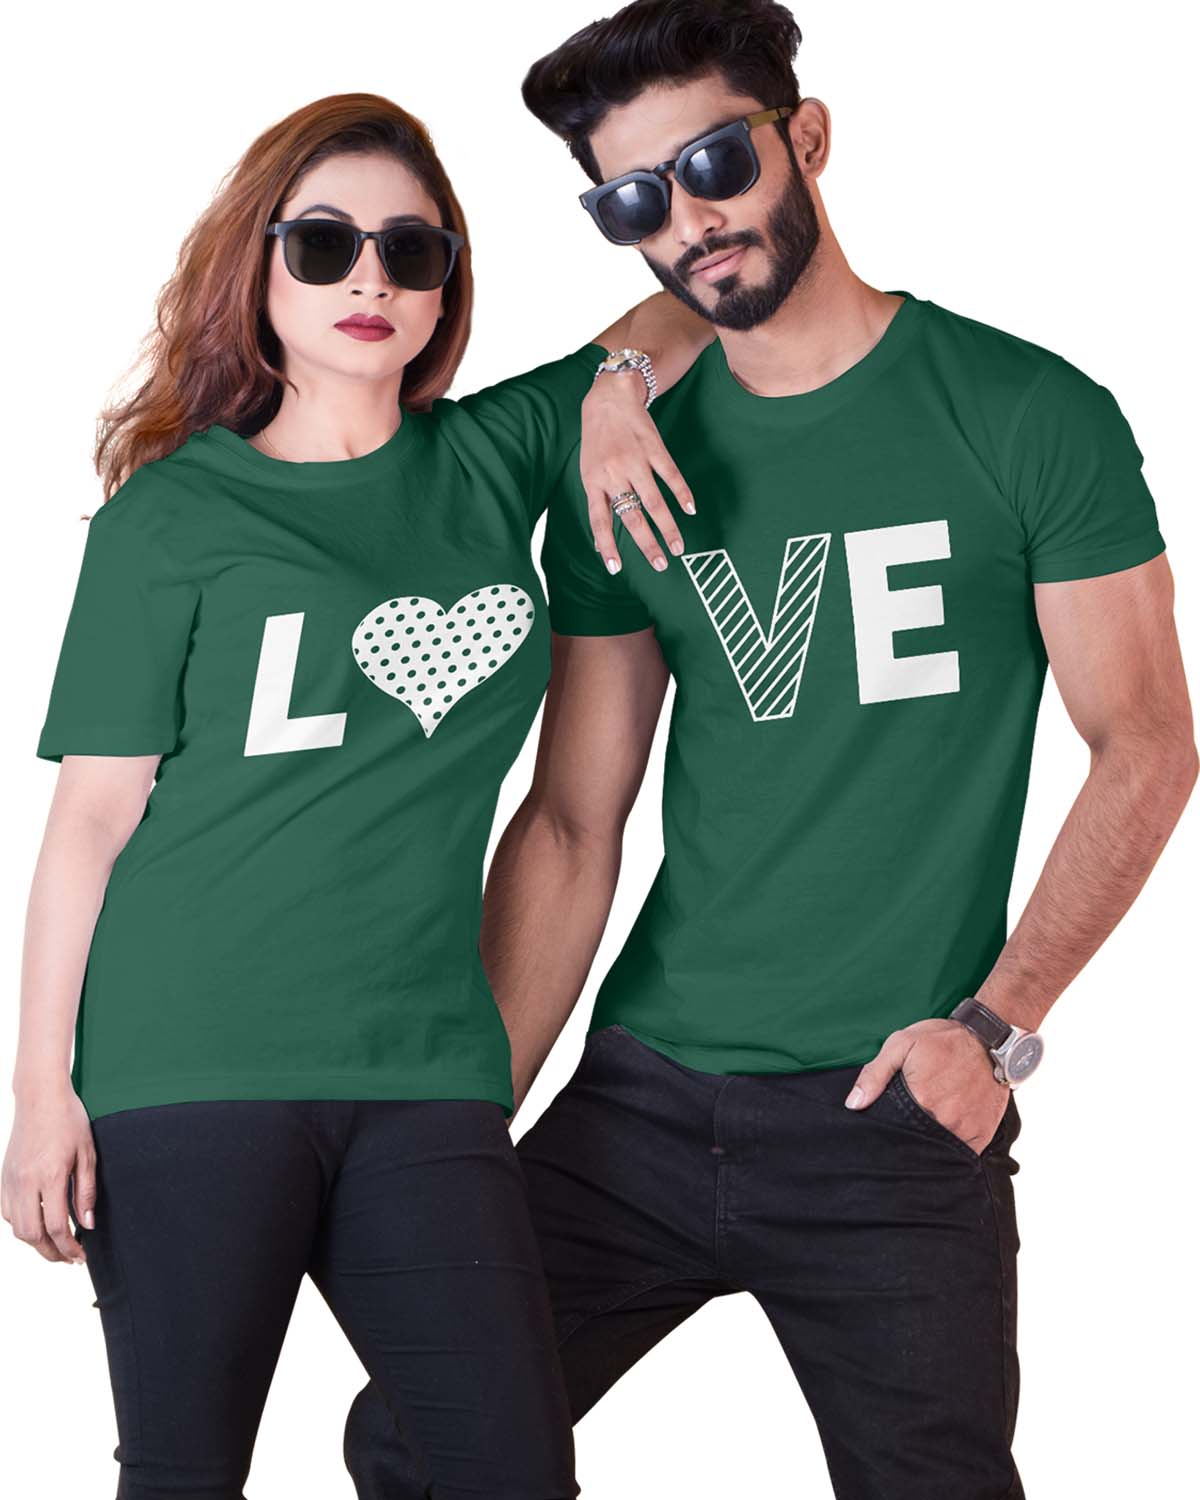 Love Couple T-Shirt